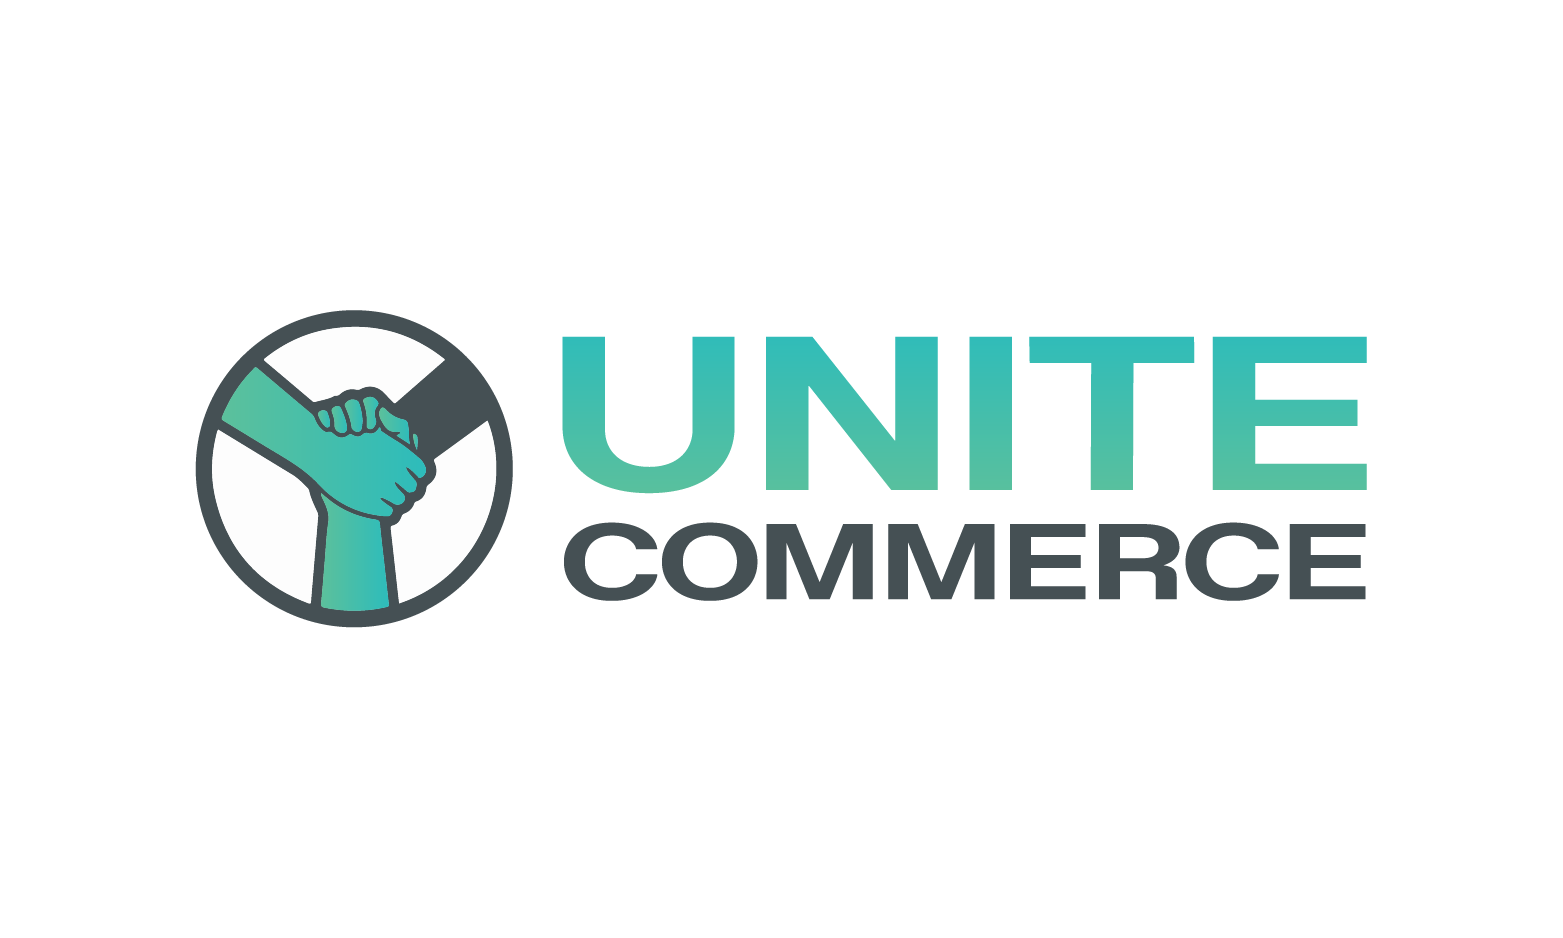 UniteCommerce.com - Creative brandable domain for sale